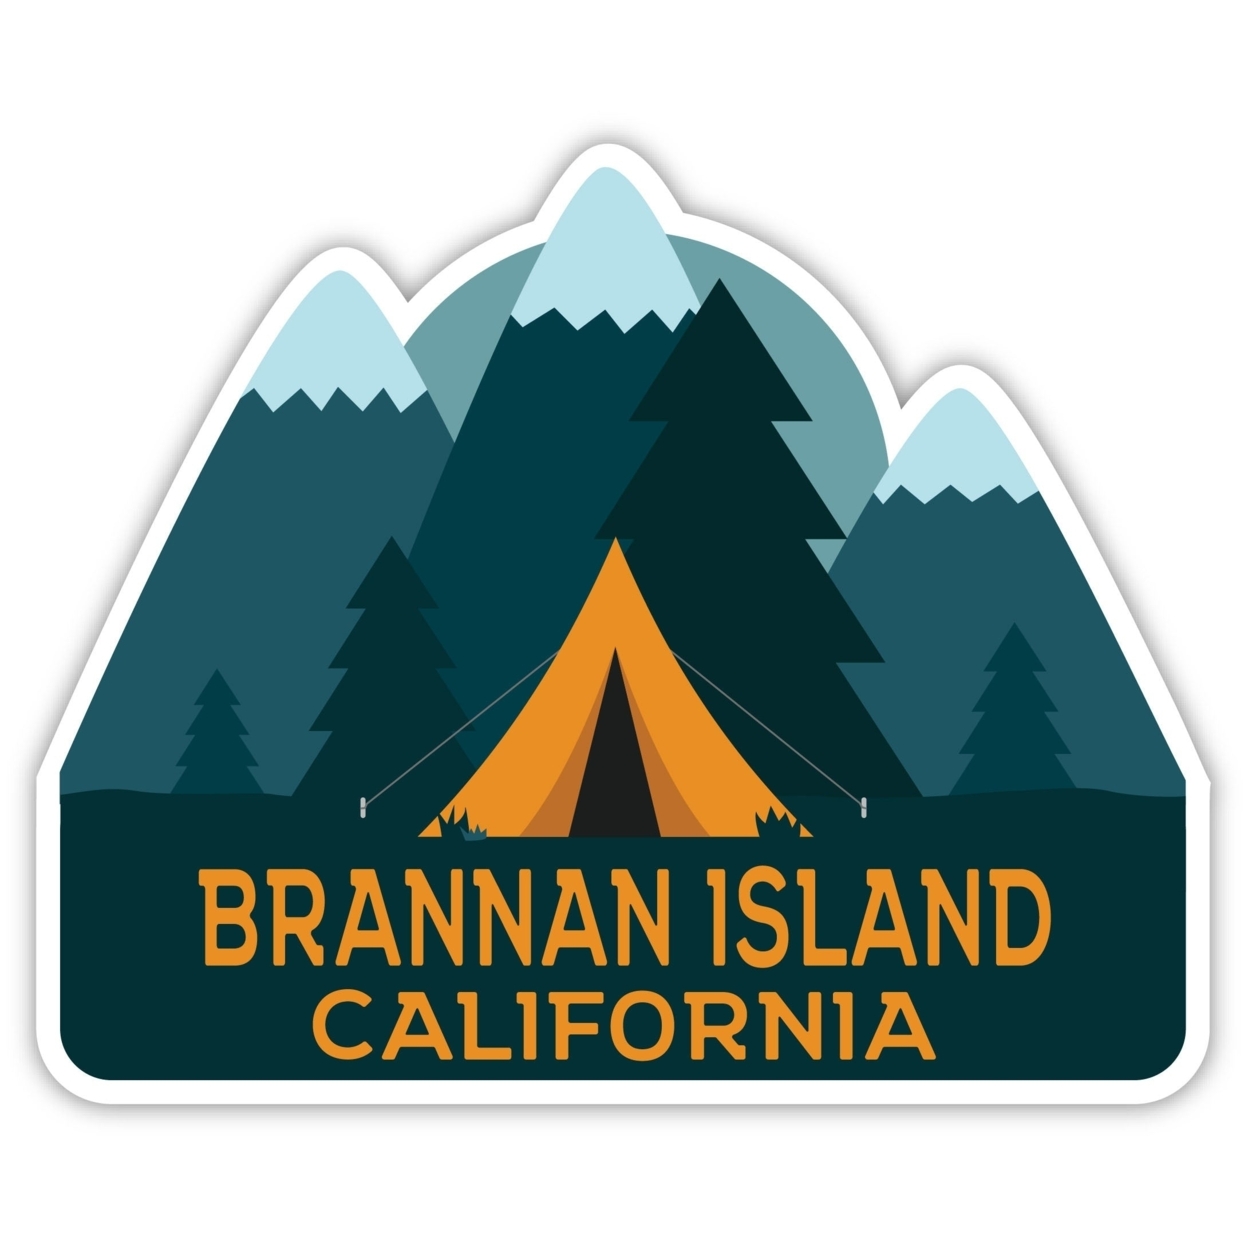 Brannan Island California Souvenir Decorative Stickers (Choose Theme And Size) - 4-Pack, 4-Inch, Adventures Awaits